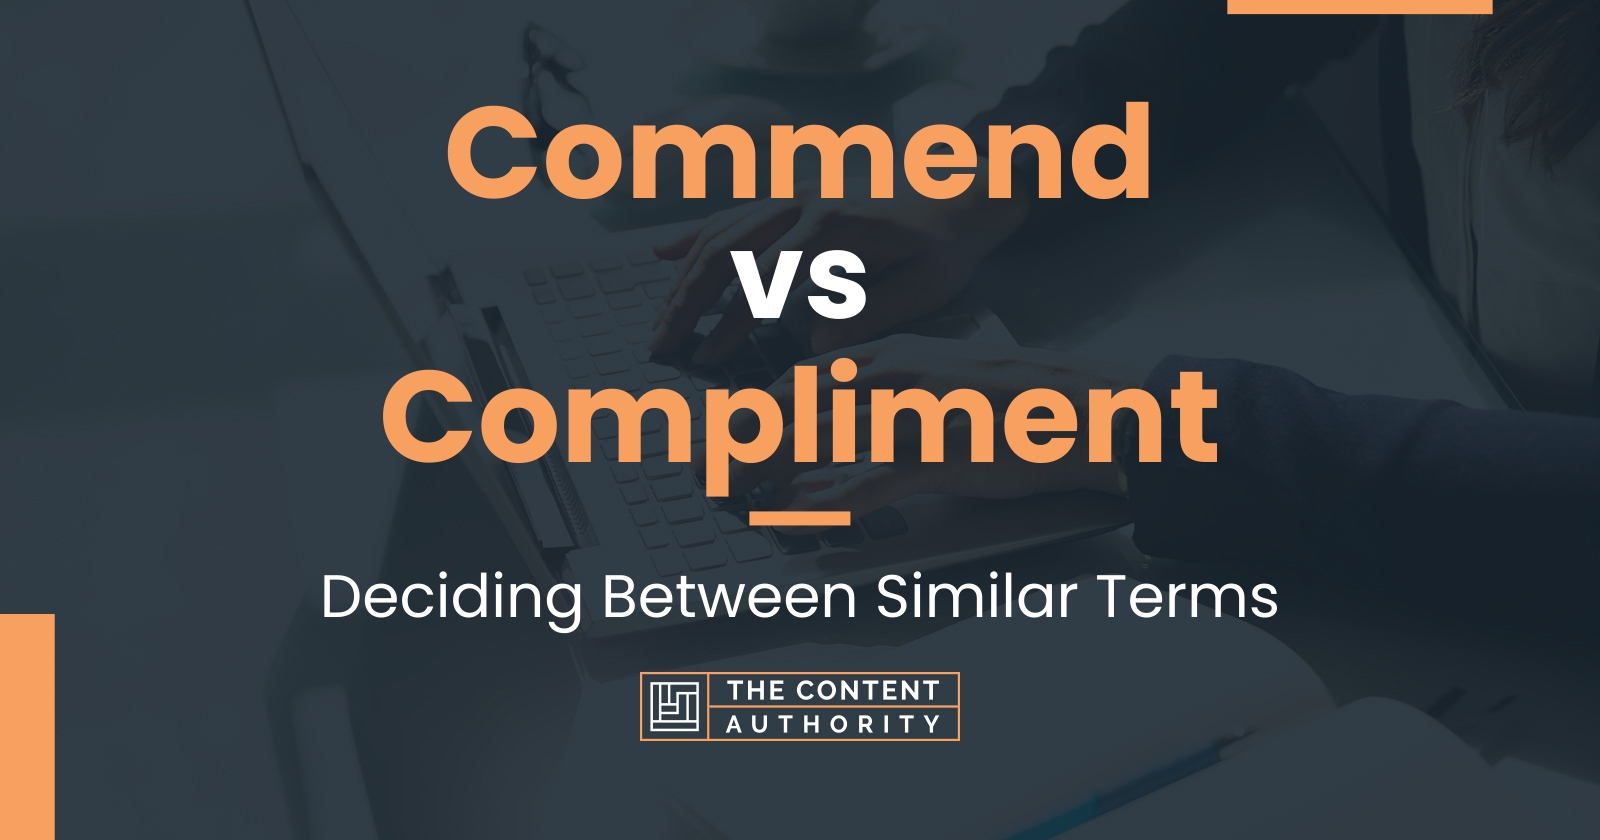 Commend vs Compliment: Deciding Between Similar Terms